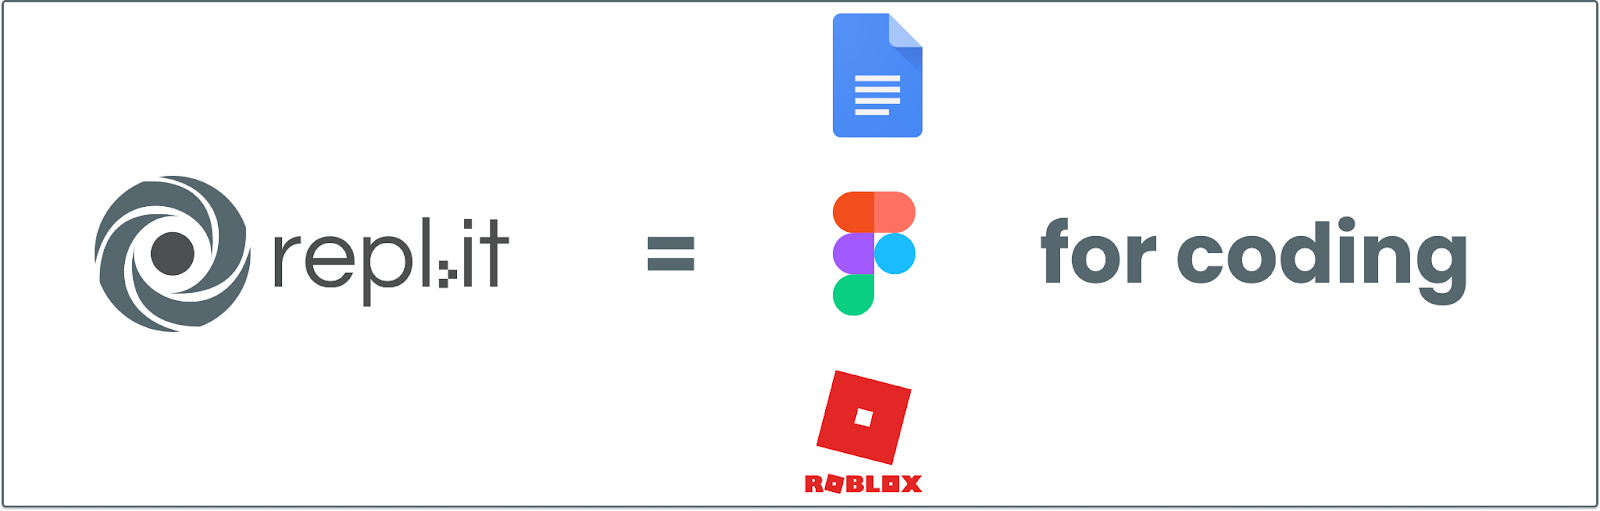 Roblox - Replit